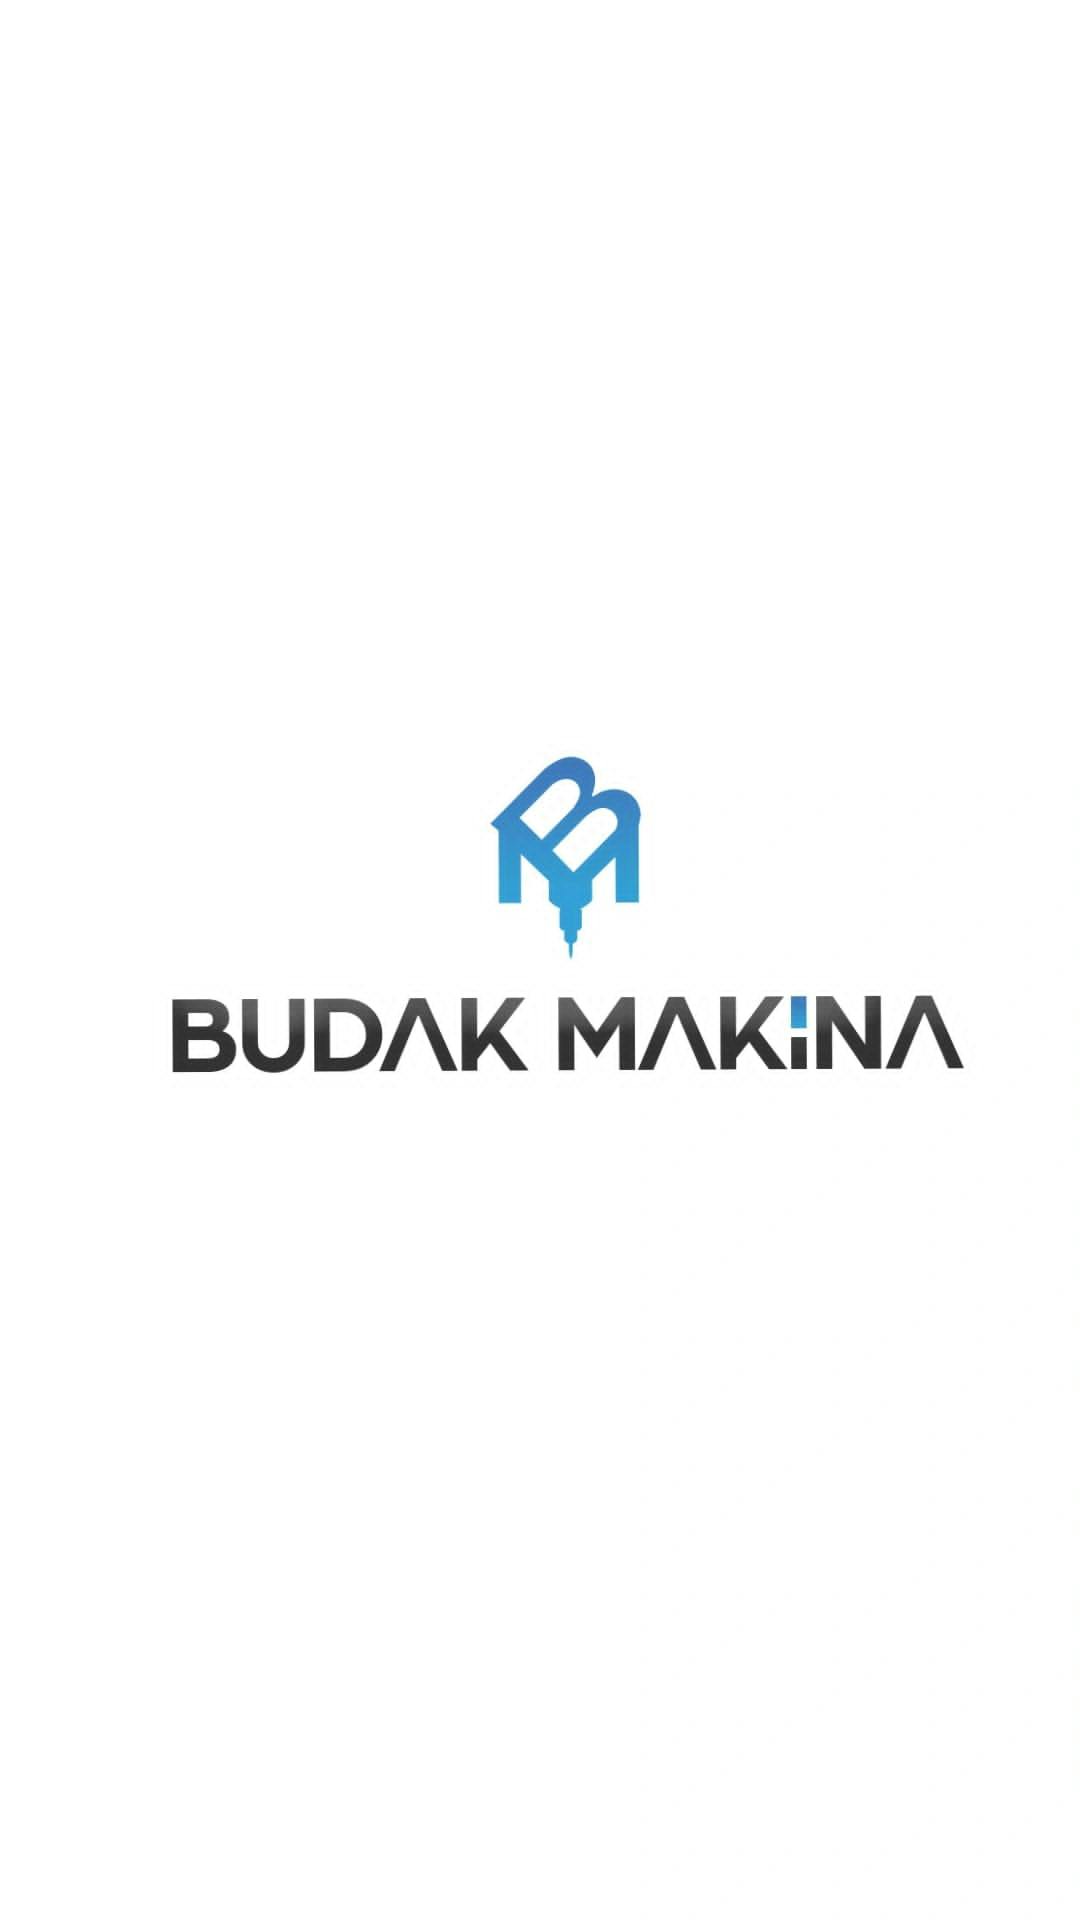 budak_makina_logo.jpg